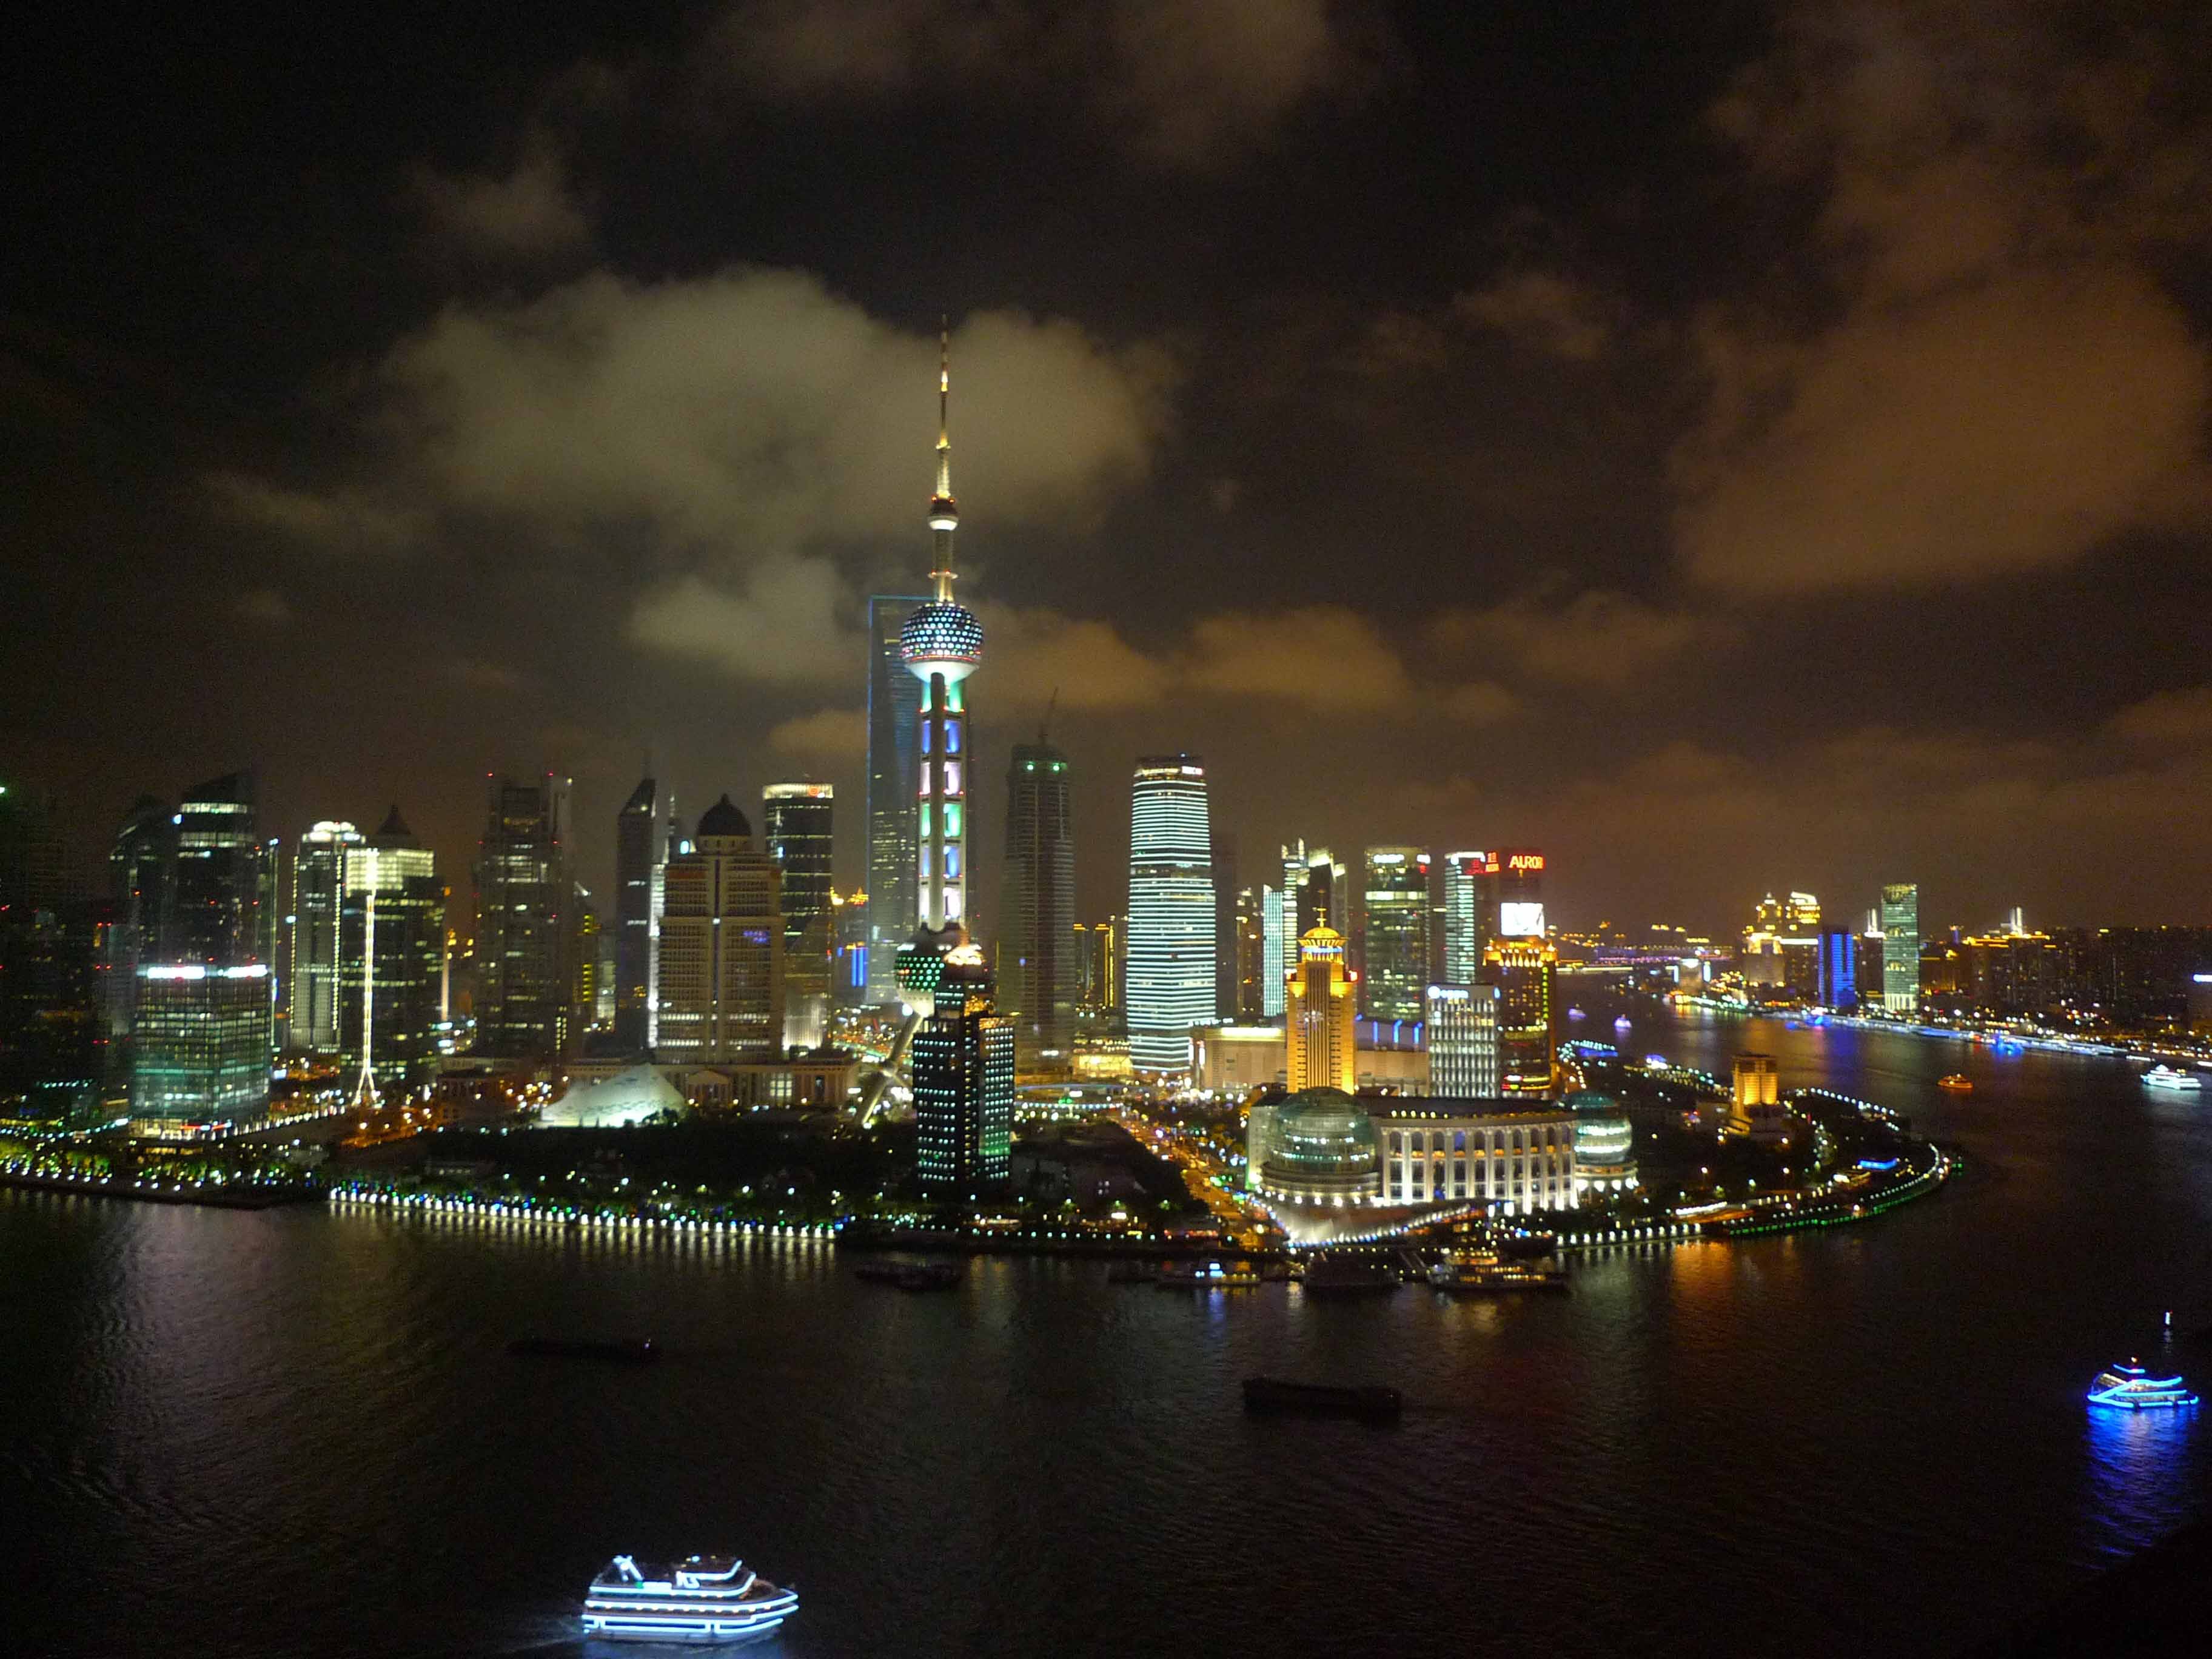 City skyline at night in Shanghai, China.